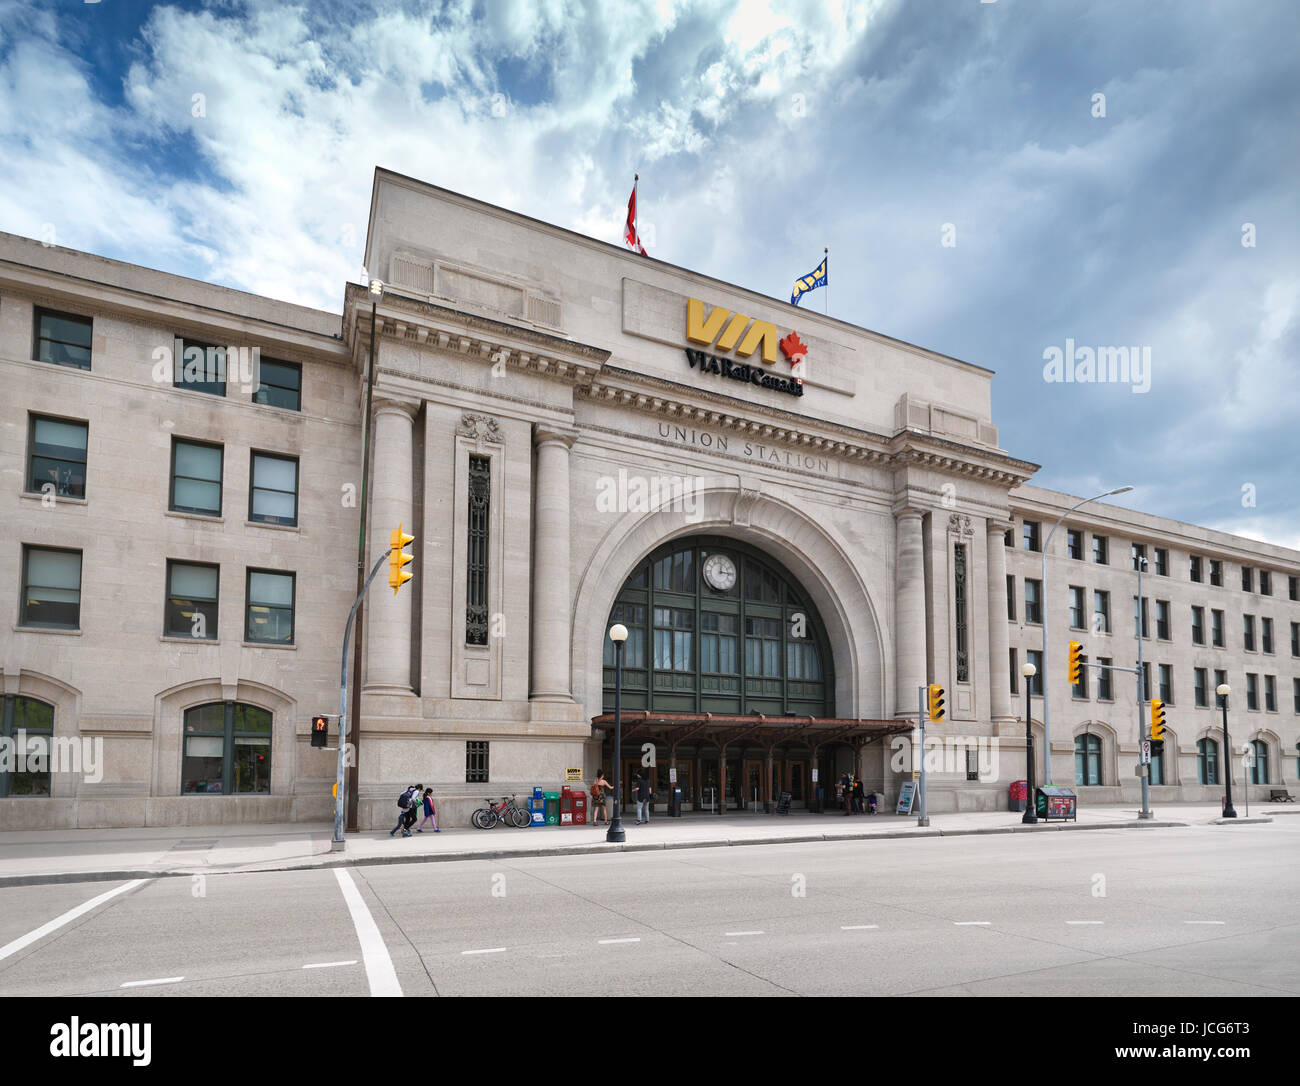 VIA Rail Canada Union Station im Zentrum von Winnipeg. Winnipeg Eisenbahnmuseum. Main Street, Winnipeg, Manitoba, Kanada 2017. Stockfoto